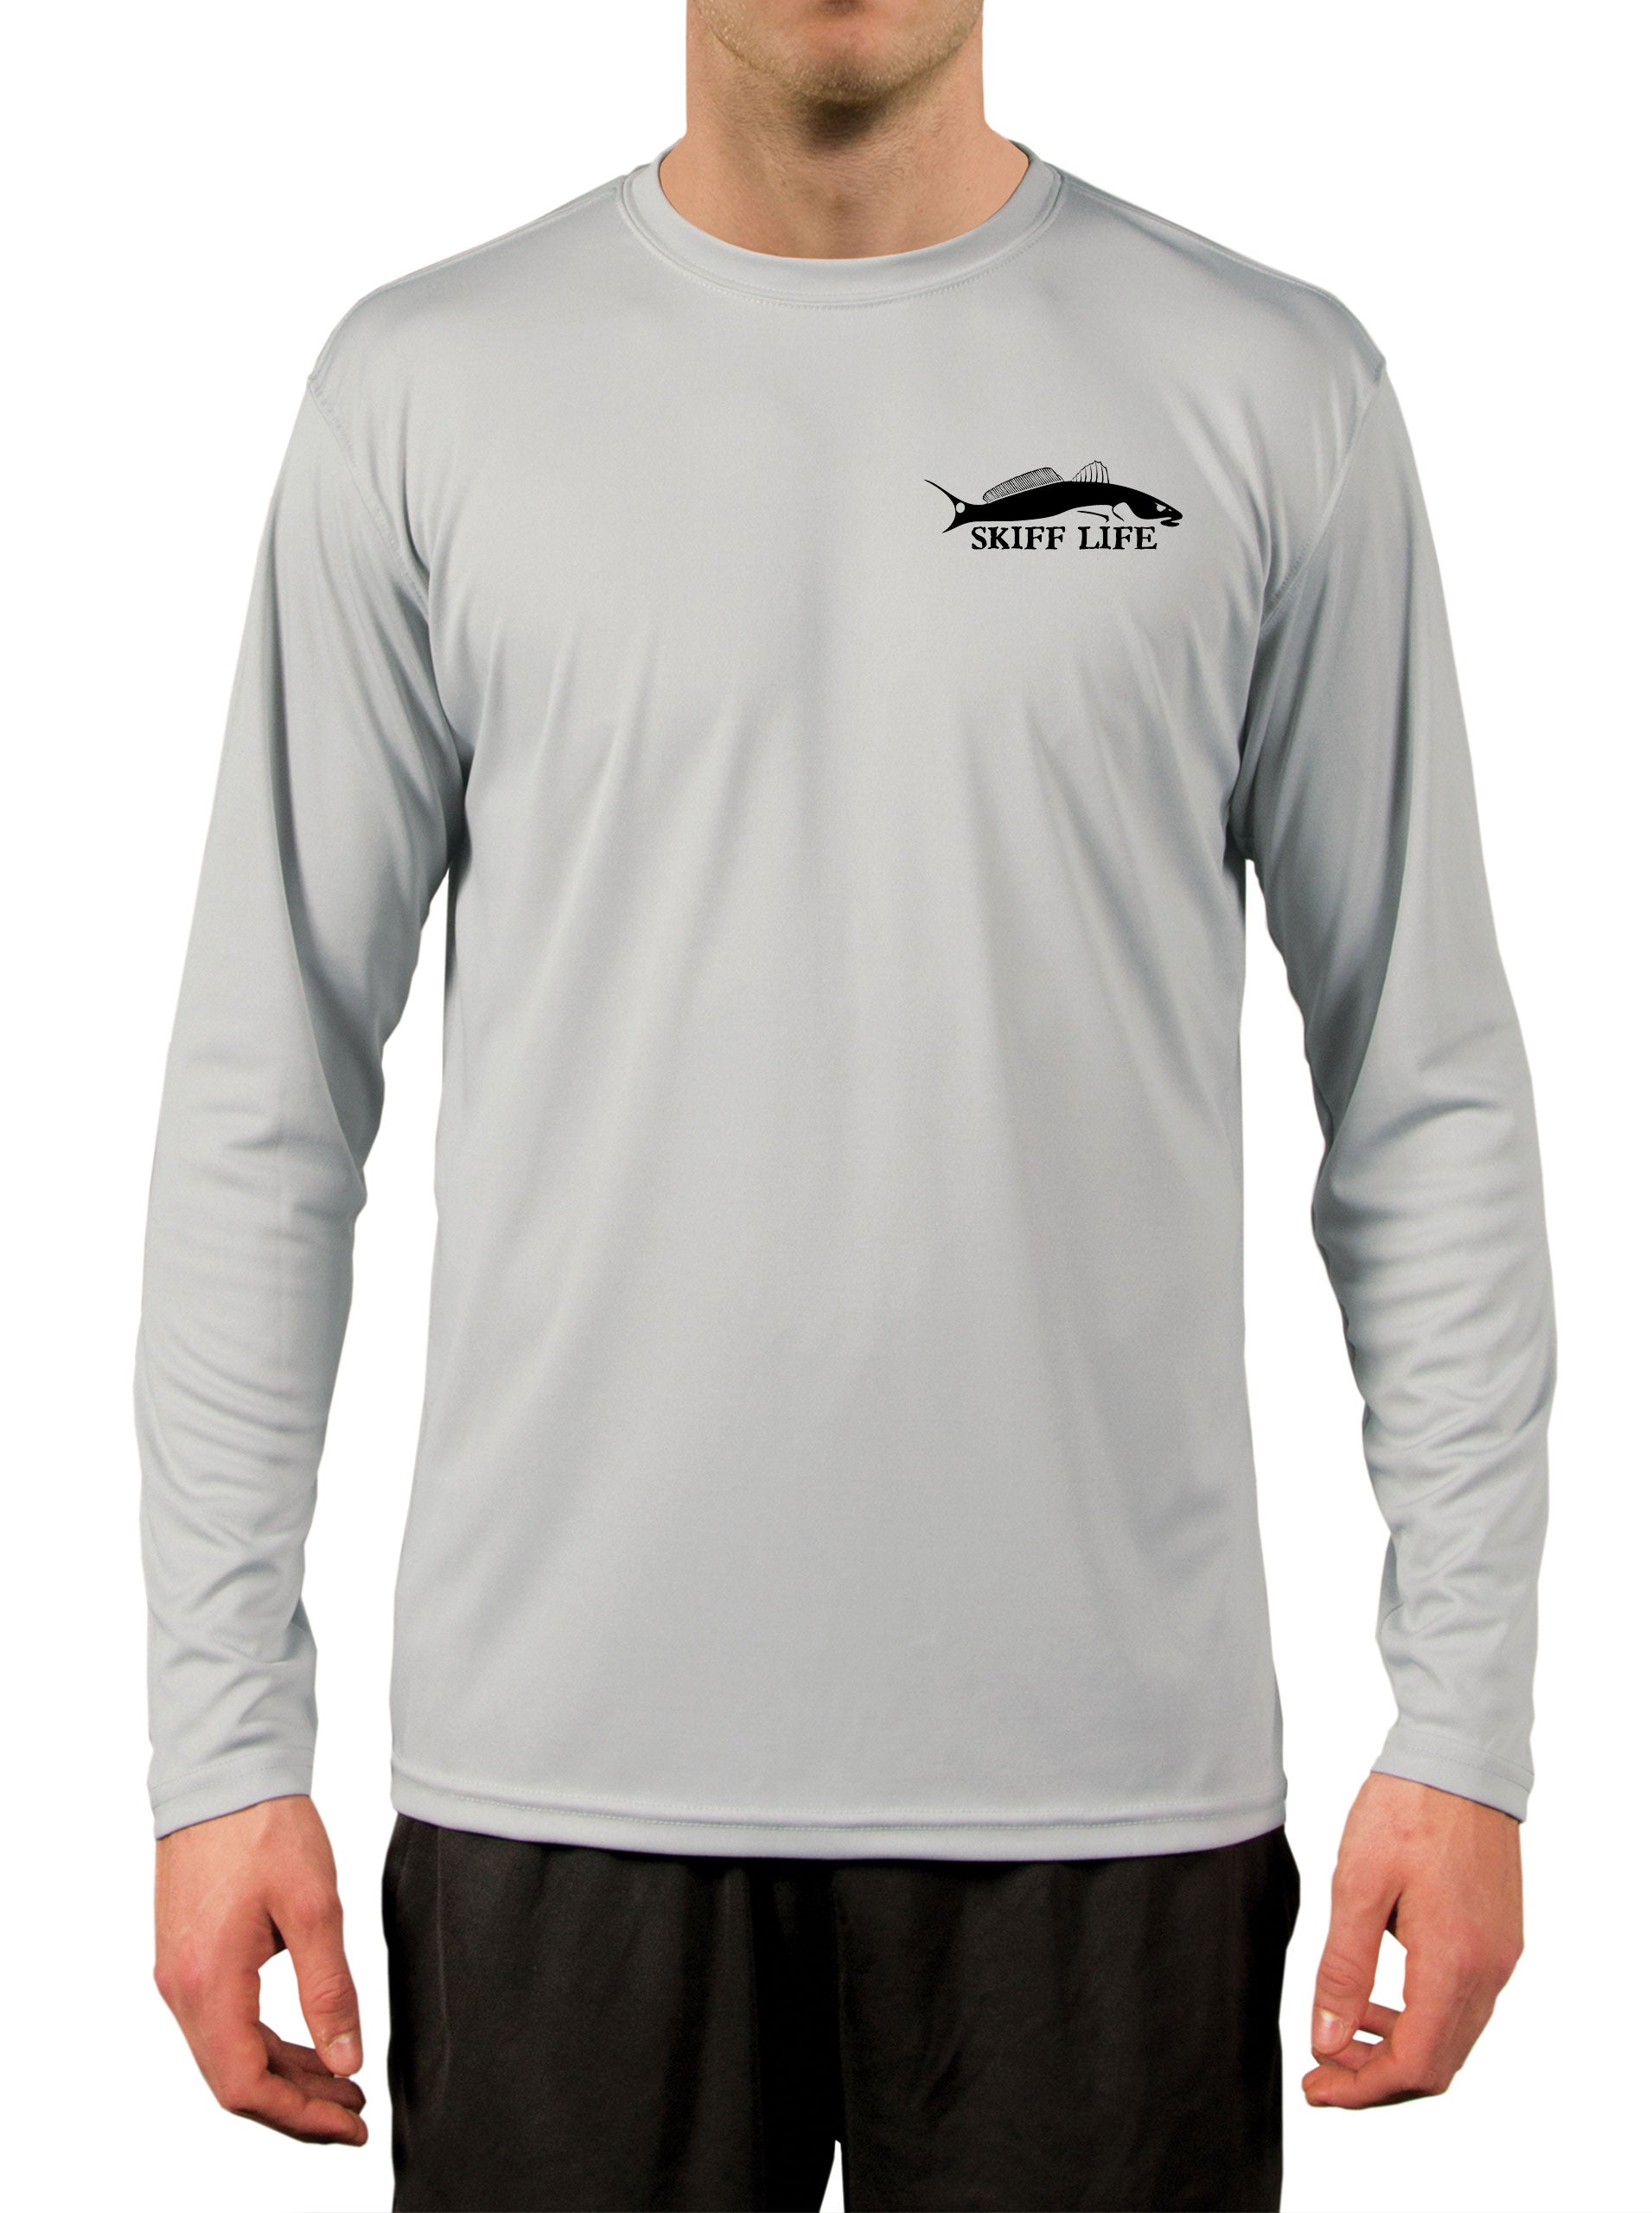 Fishing Shirts Men's Quick Dry Lightweight UPF 50+ Long Sleeve Shirts Rash Guard Swim Shirts Hiking Shirts Moisture Wicking 2XL / Pearl Gray